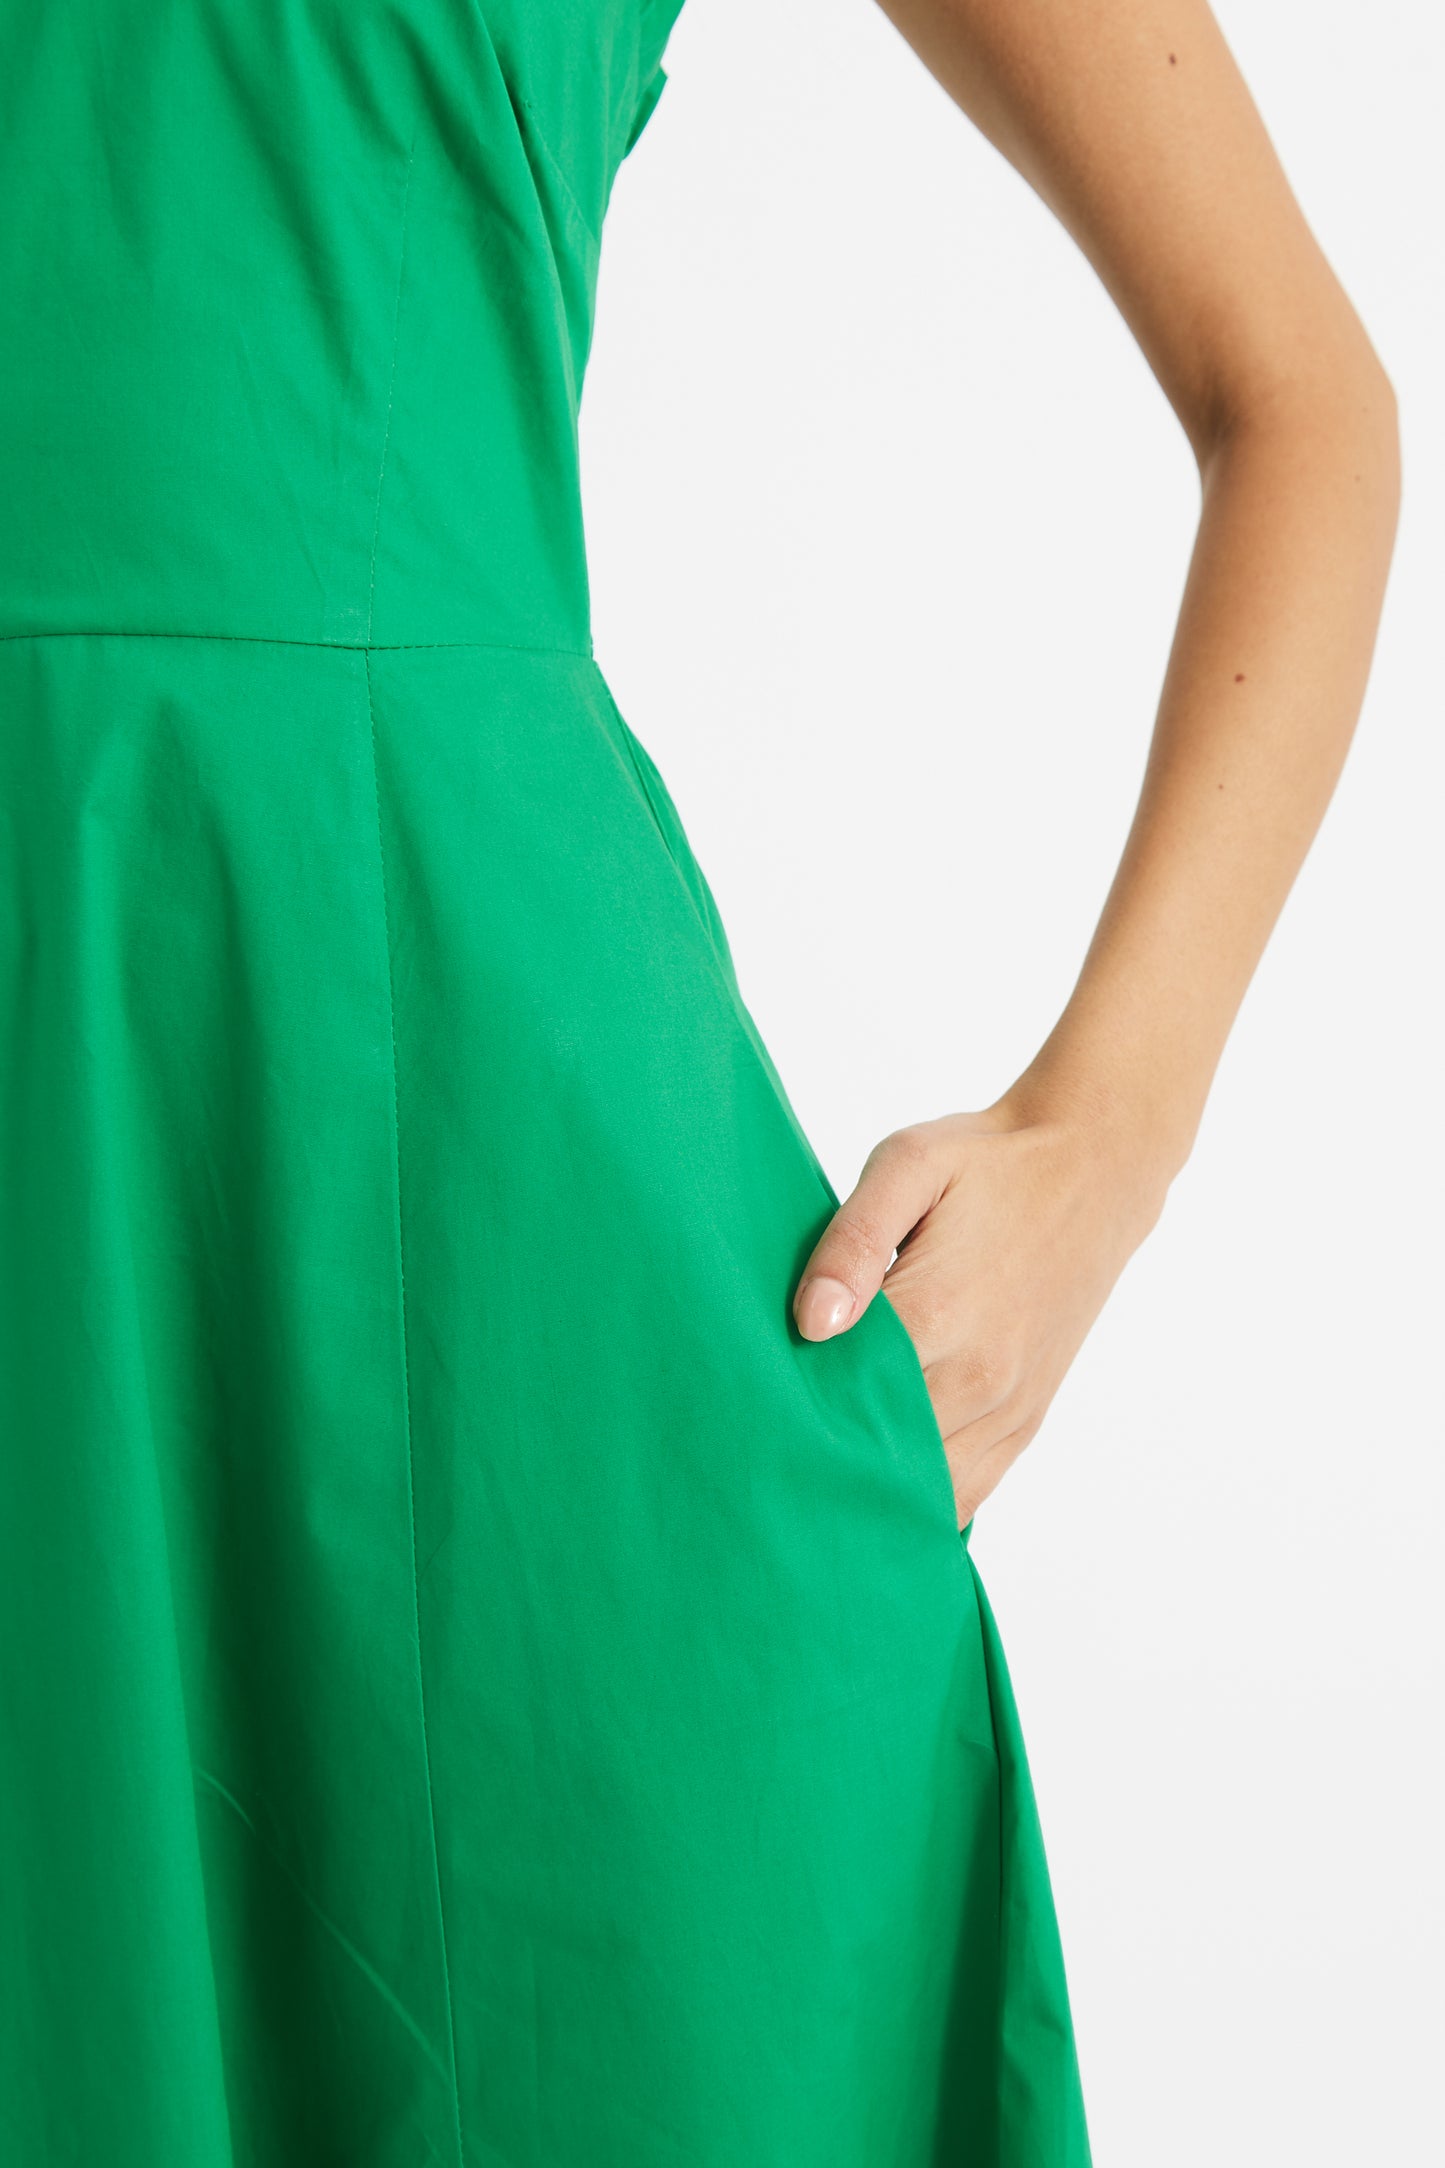 Aria Poplin Green Halter Neck Midi Dress